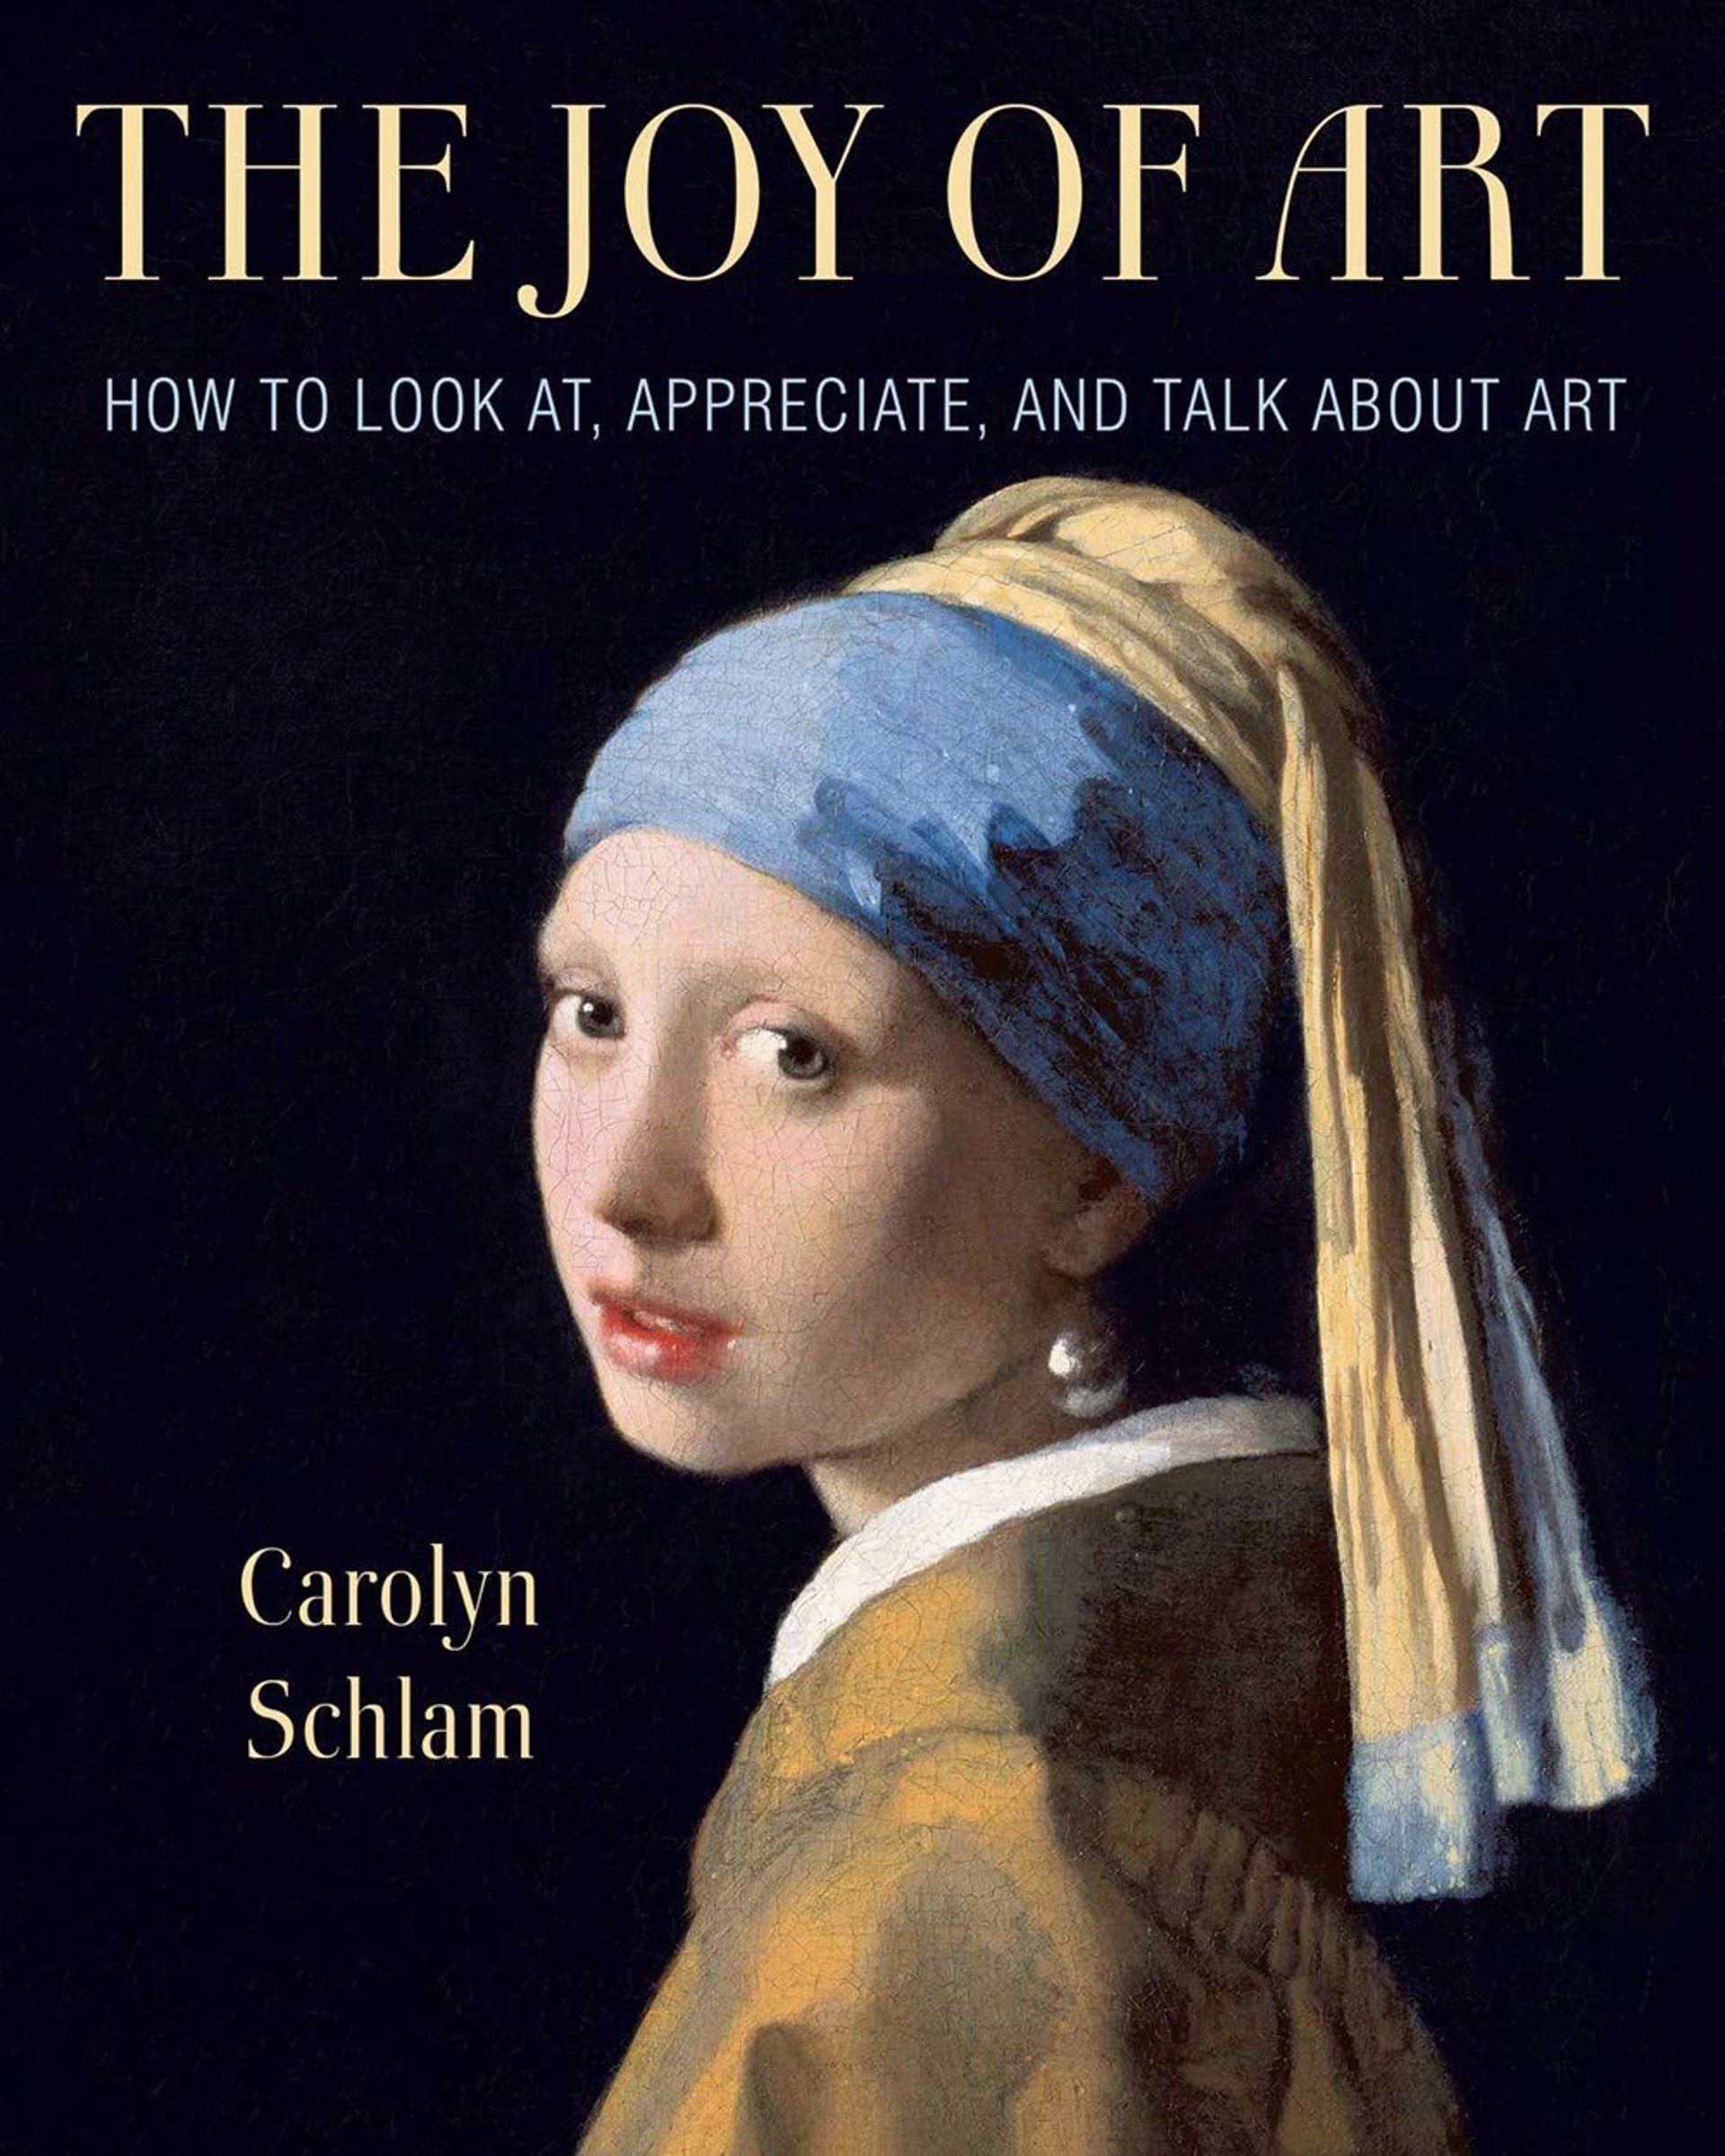 The Joy of Art by Carolyn Schlam